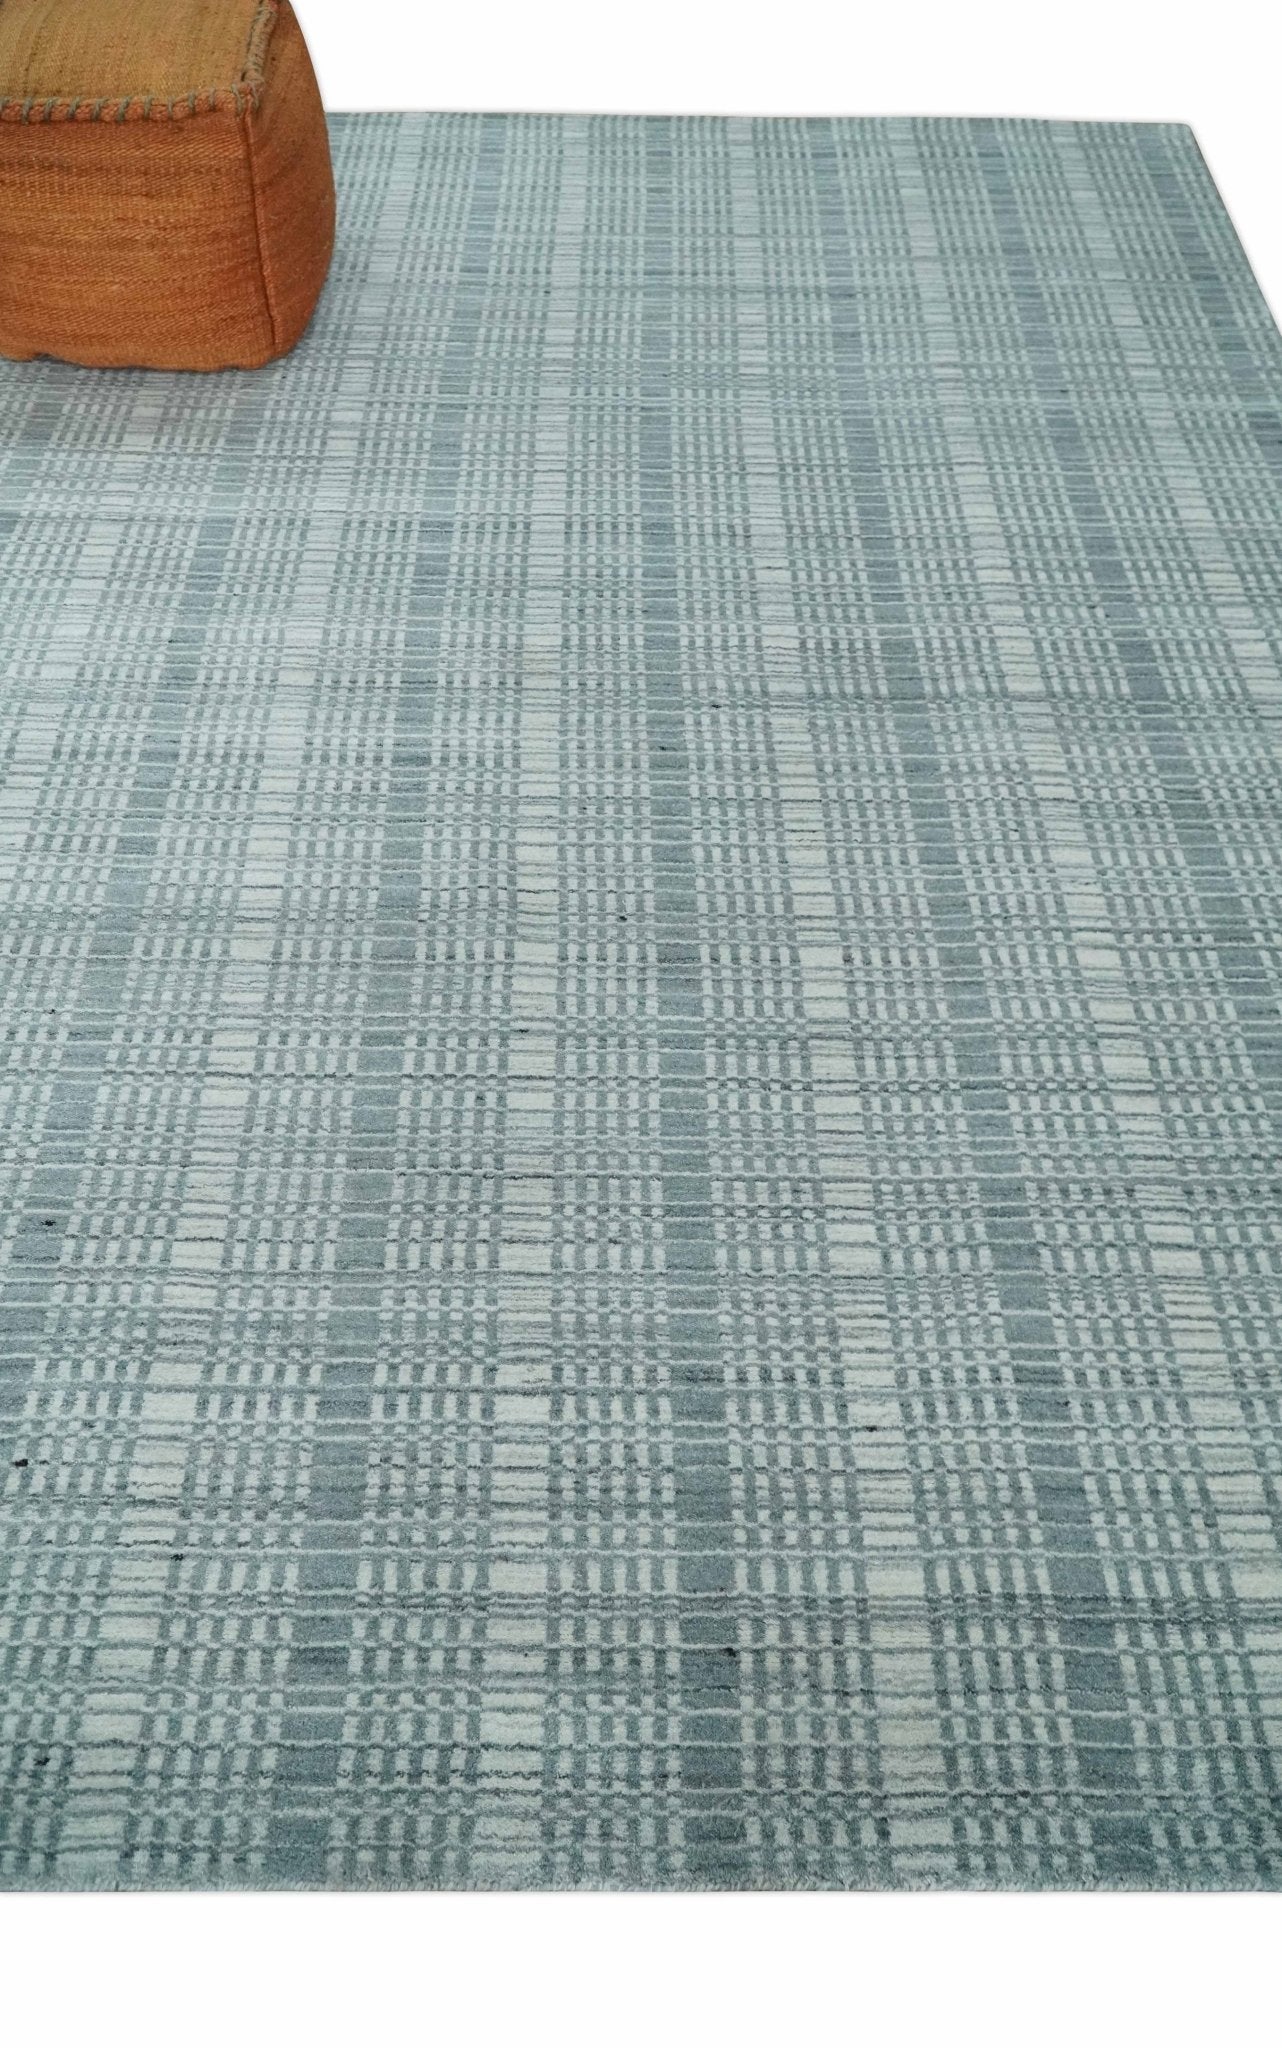 Rectangular Flat Weave Grey Crossed Woolen Area Rug and Carpets